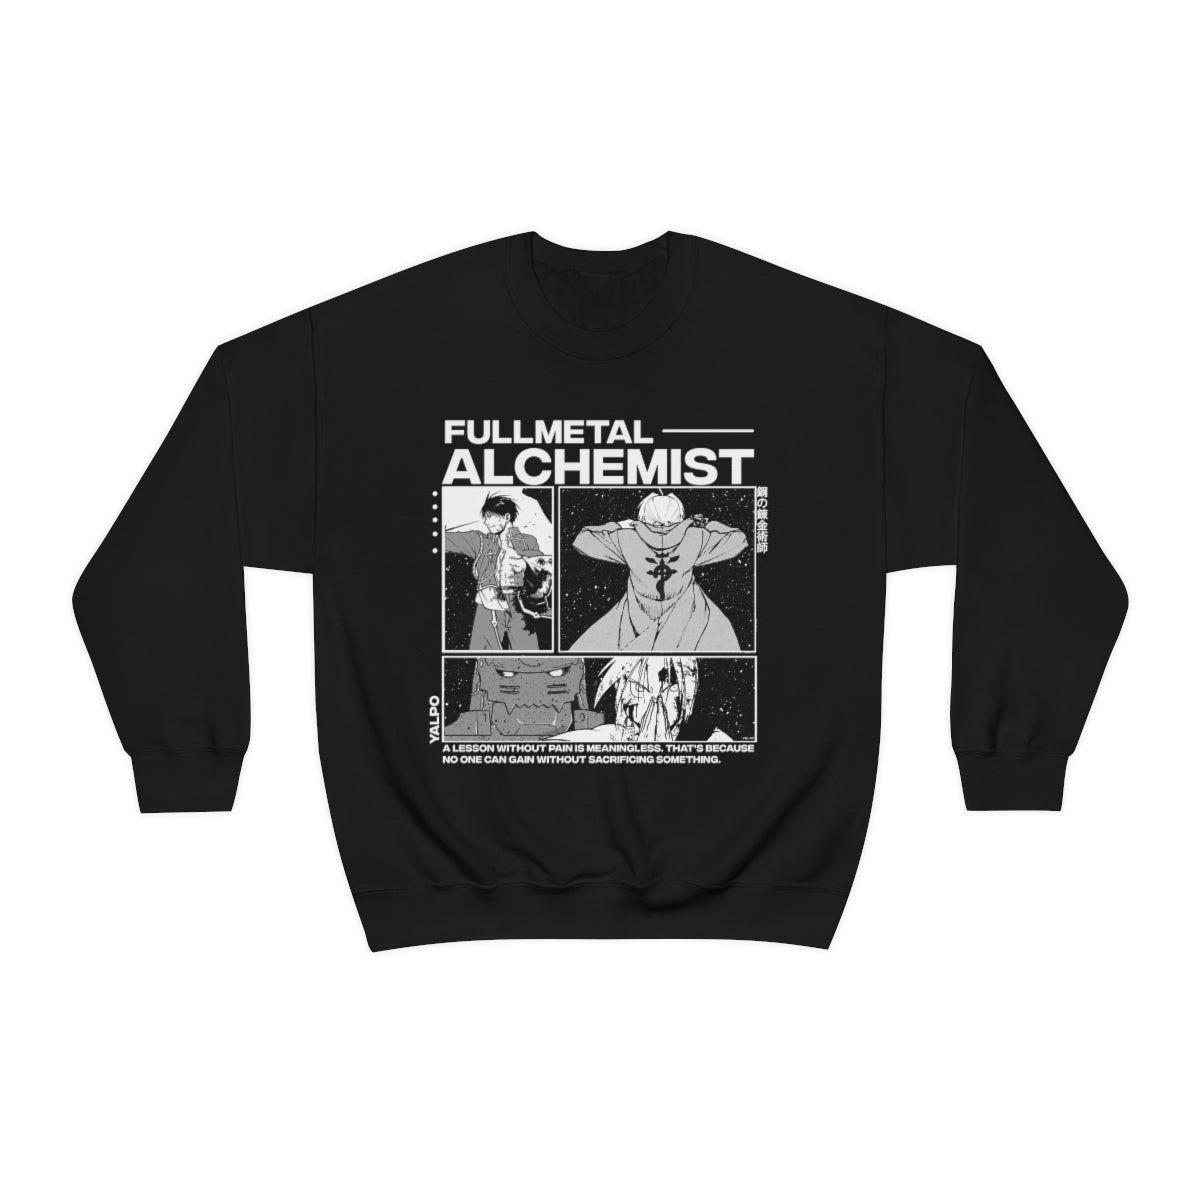 Fullmetal Alchemist Sweatshirt,Brotherhood, FMAB Shirt, Alphonse Elric, Edward Elric, FMA T-Shirt, Anime Sweater, Anime Aesthetic, Unisex